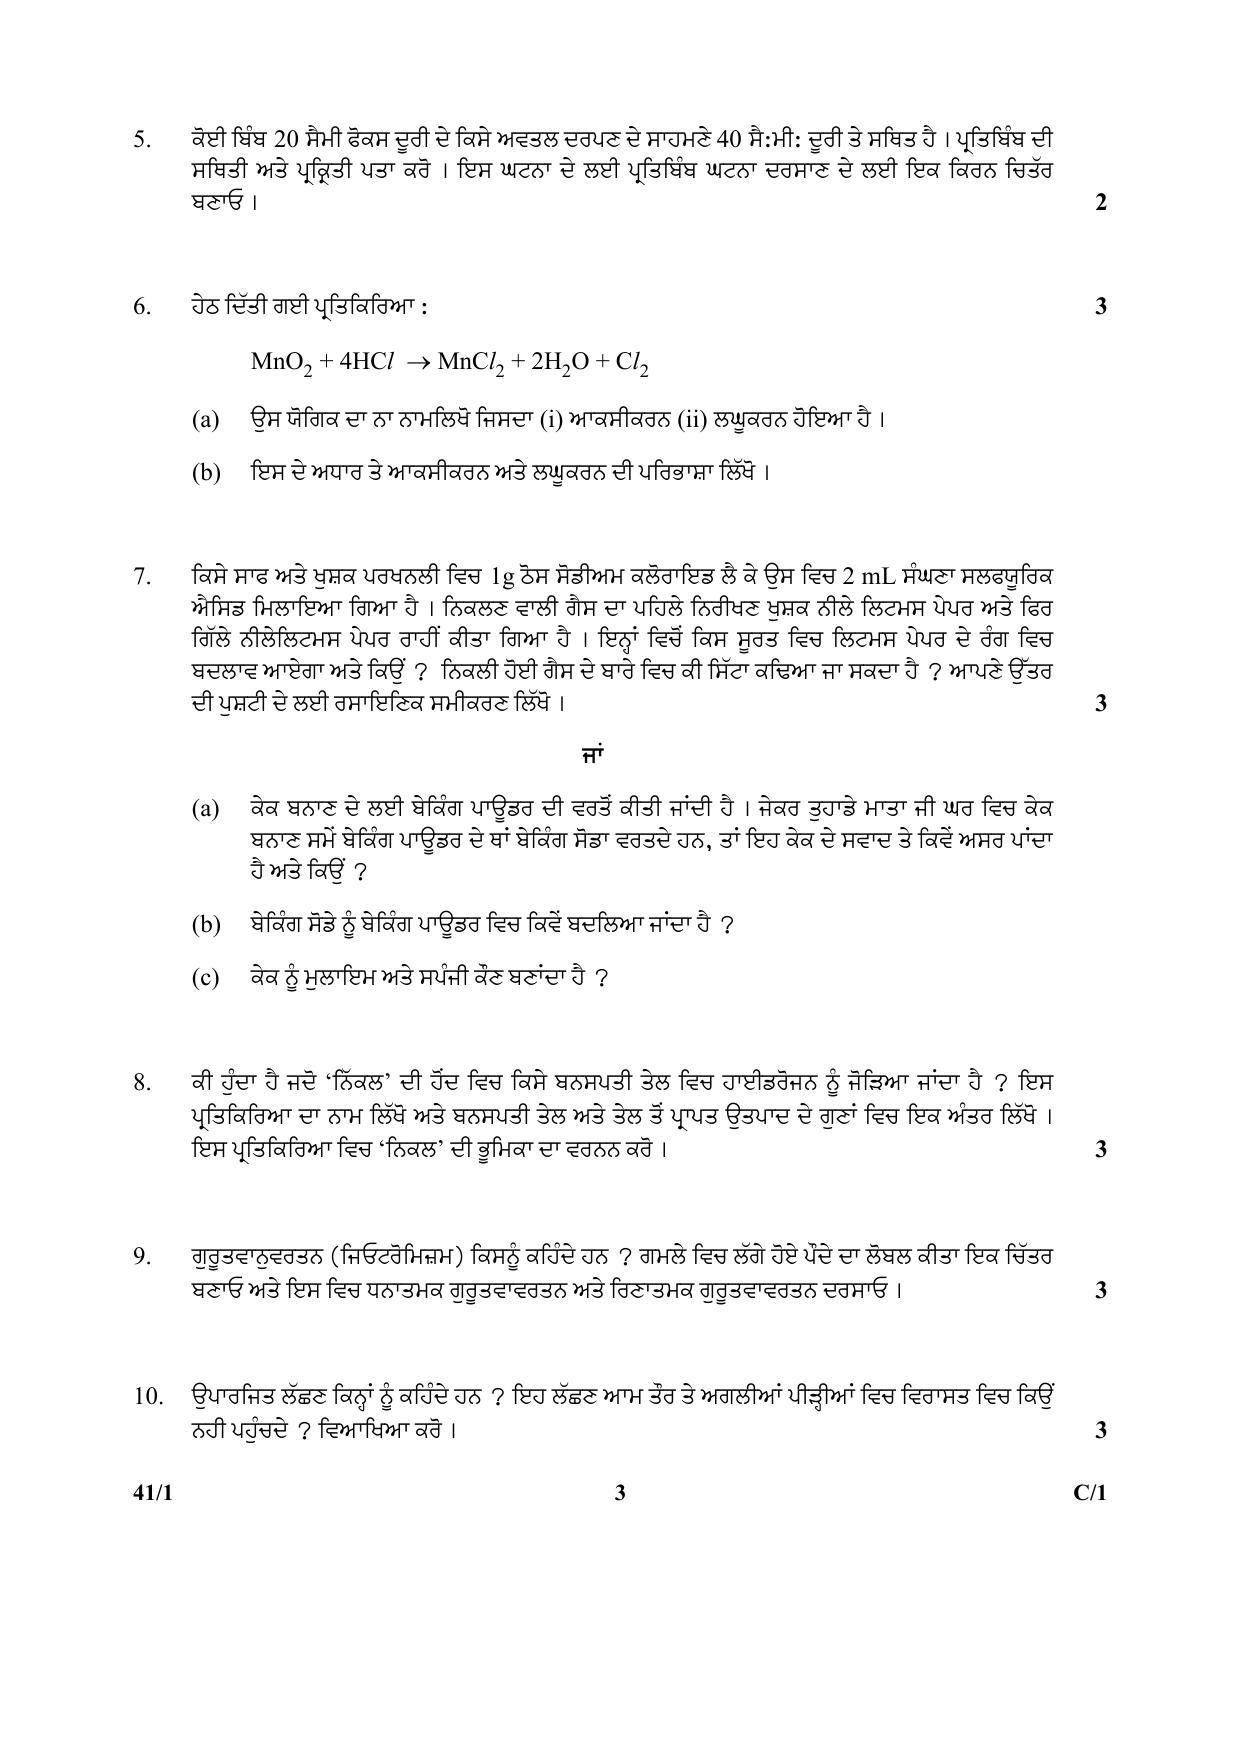 CBSE Class 10 41-1 Science PUNJABI VERSION 2018 Compartment Question Paper - Page 3